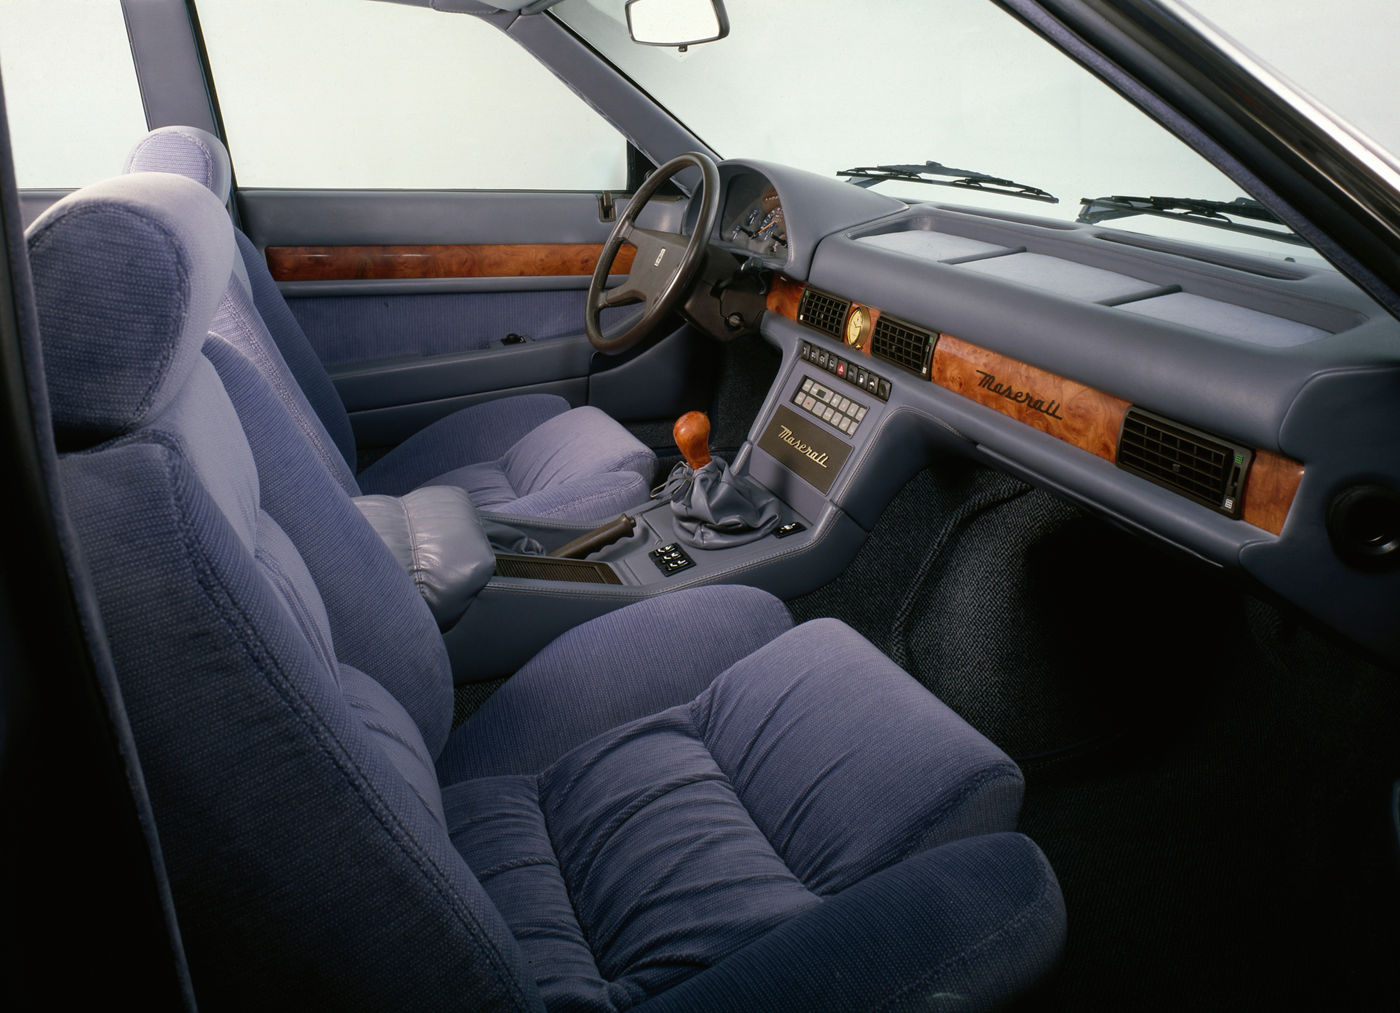 1988 Maserati 422 - Biturbo - interior view of the  classic car model